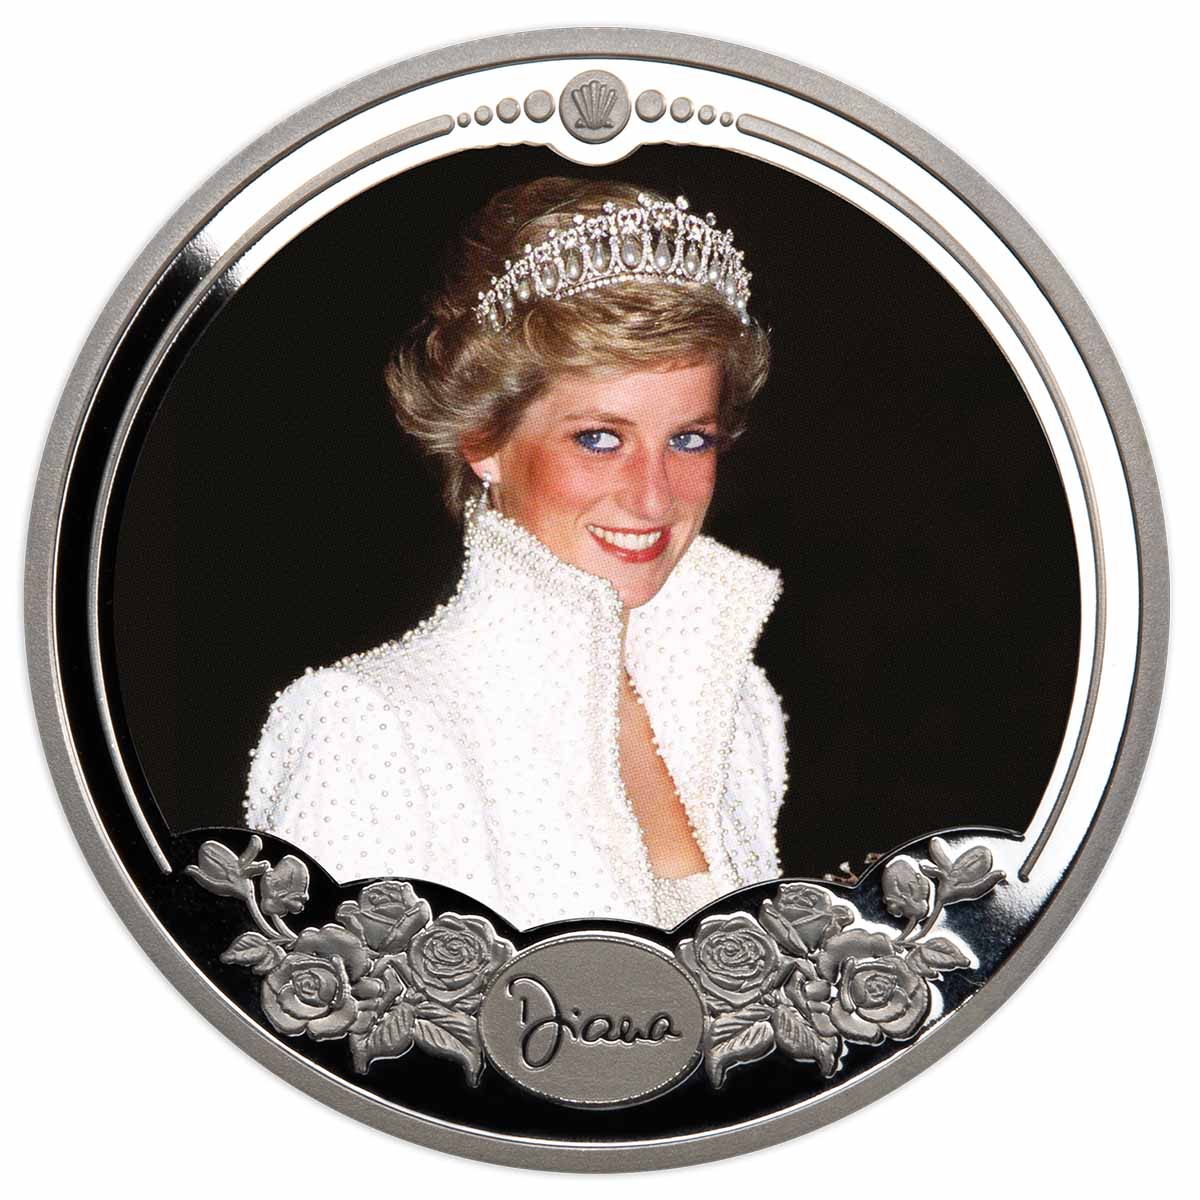 Diana, Portraits of a Princess - Elvis Dress Silver Prooflike Commemorative